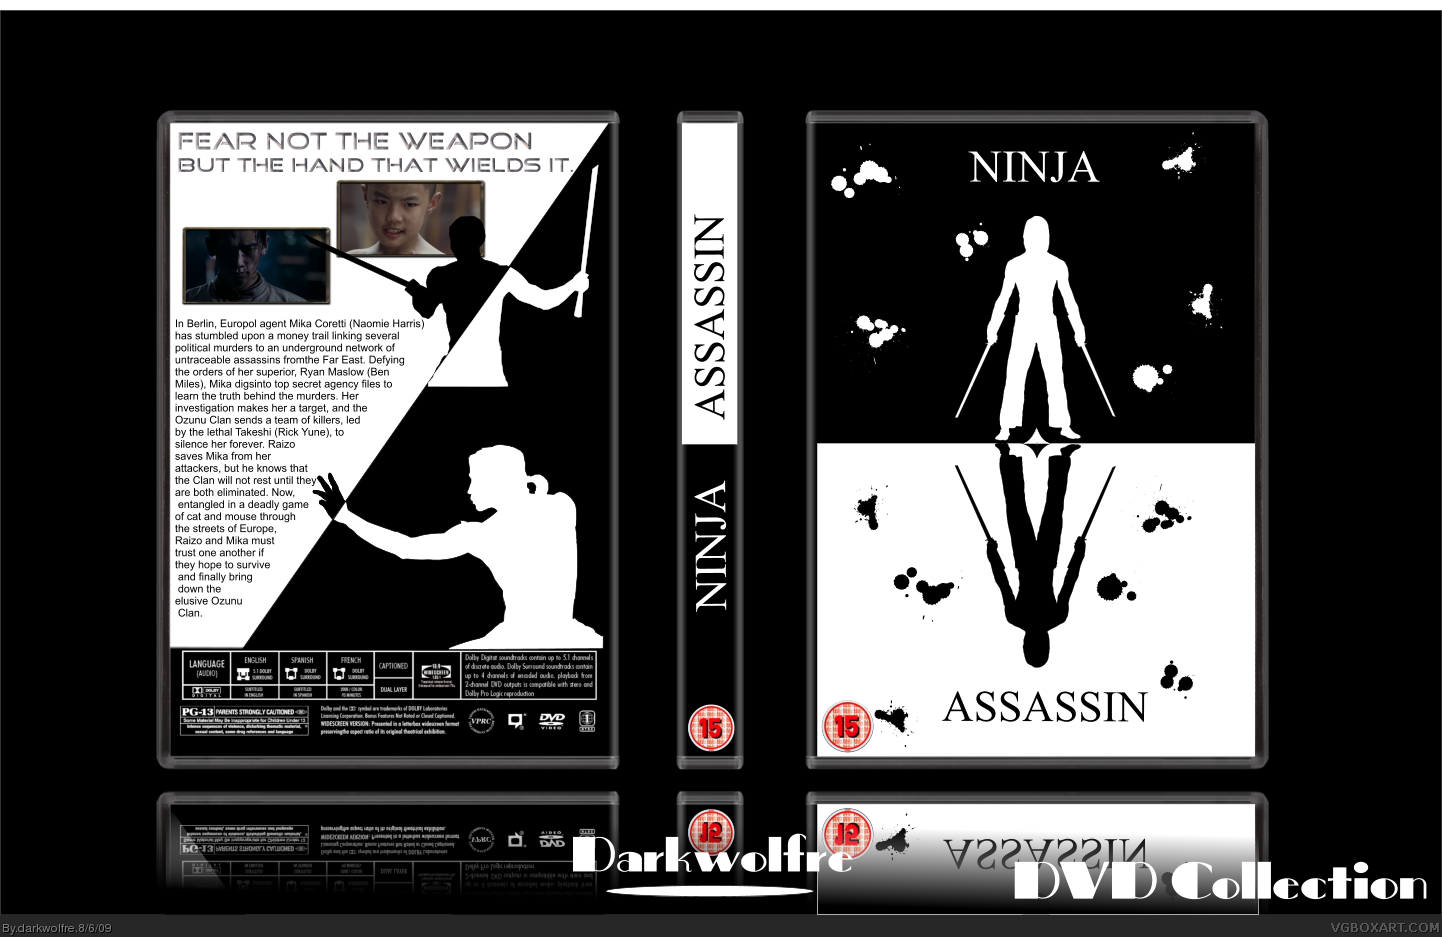 Ninja Assassin box cover